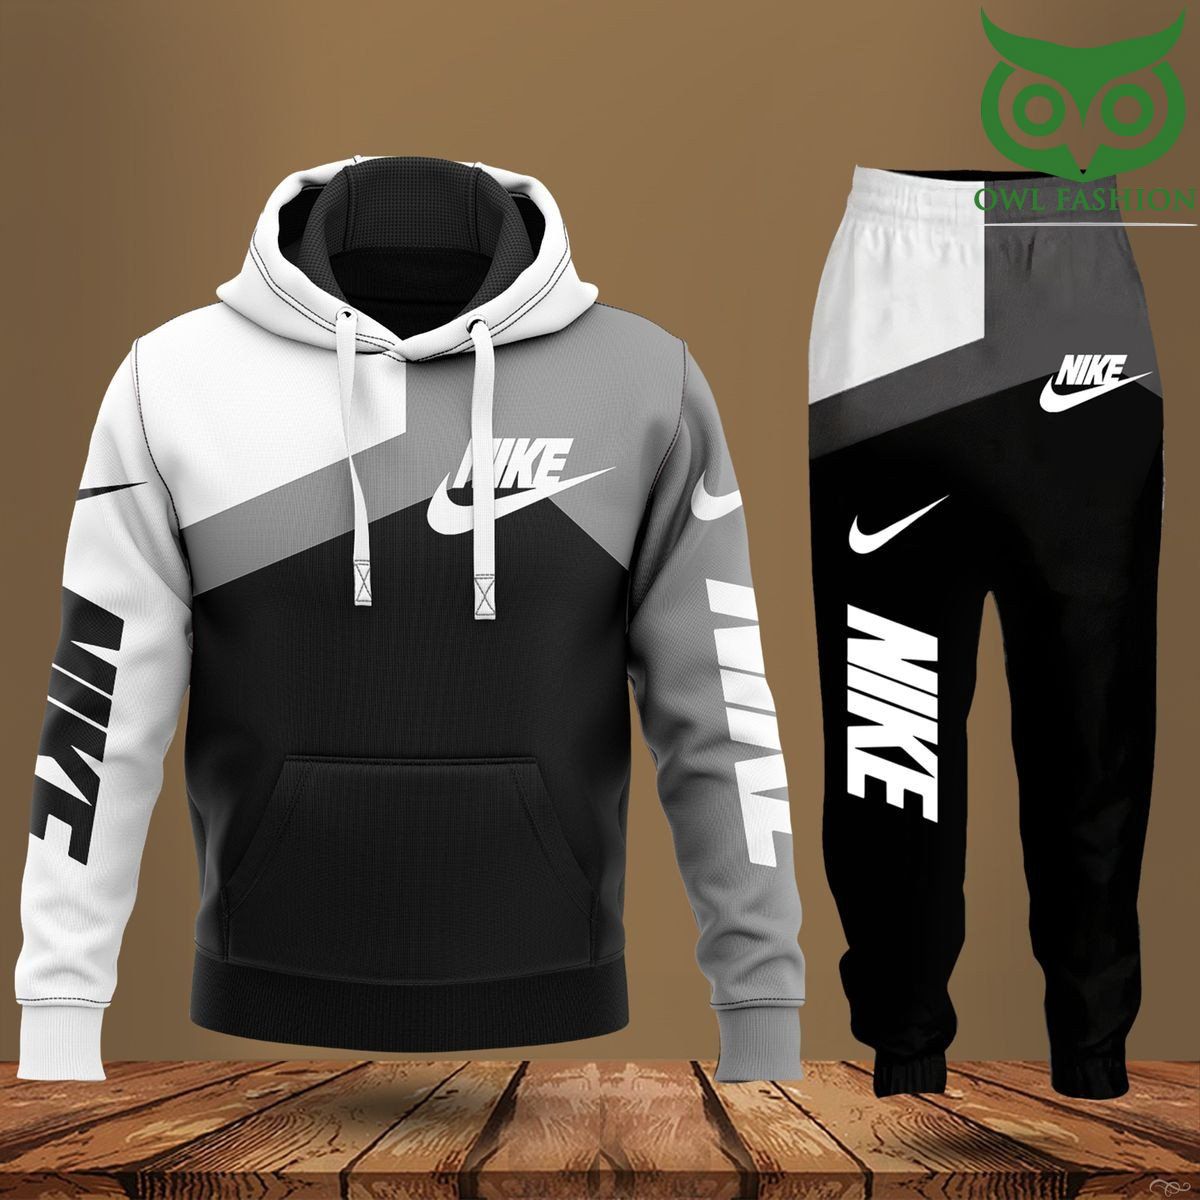 Nike black and grey hoodies and sweatpants